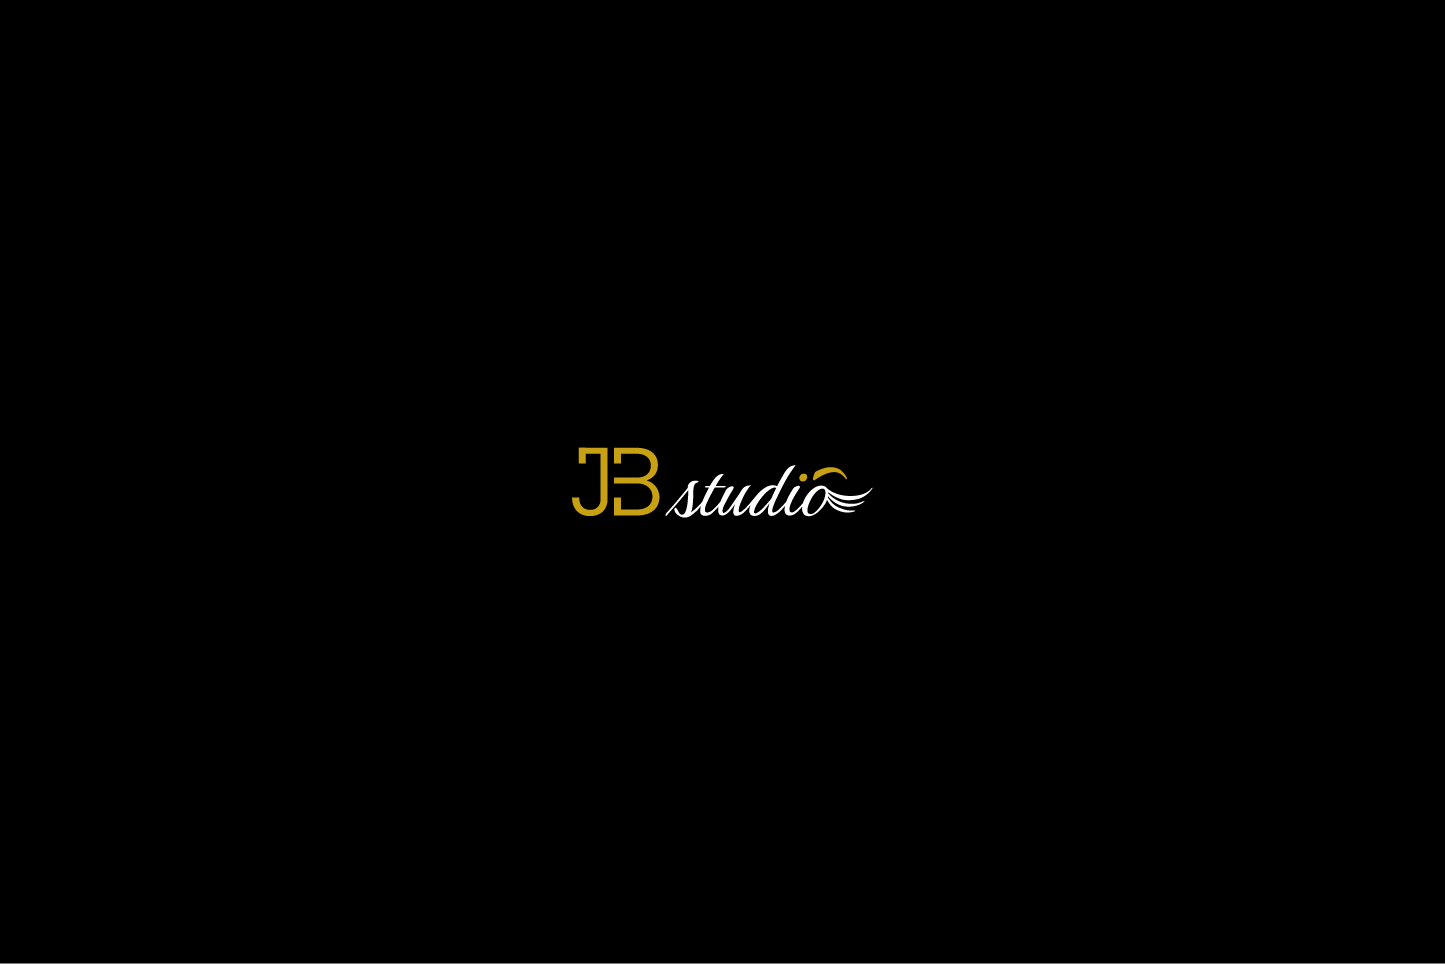 JB studio - logo - barevný negativ